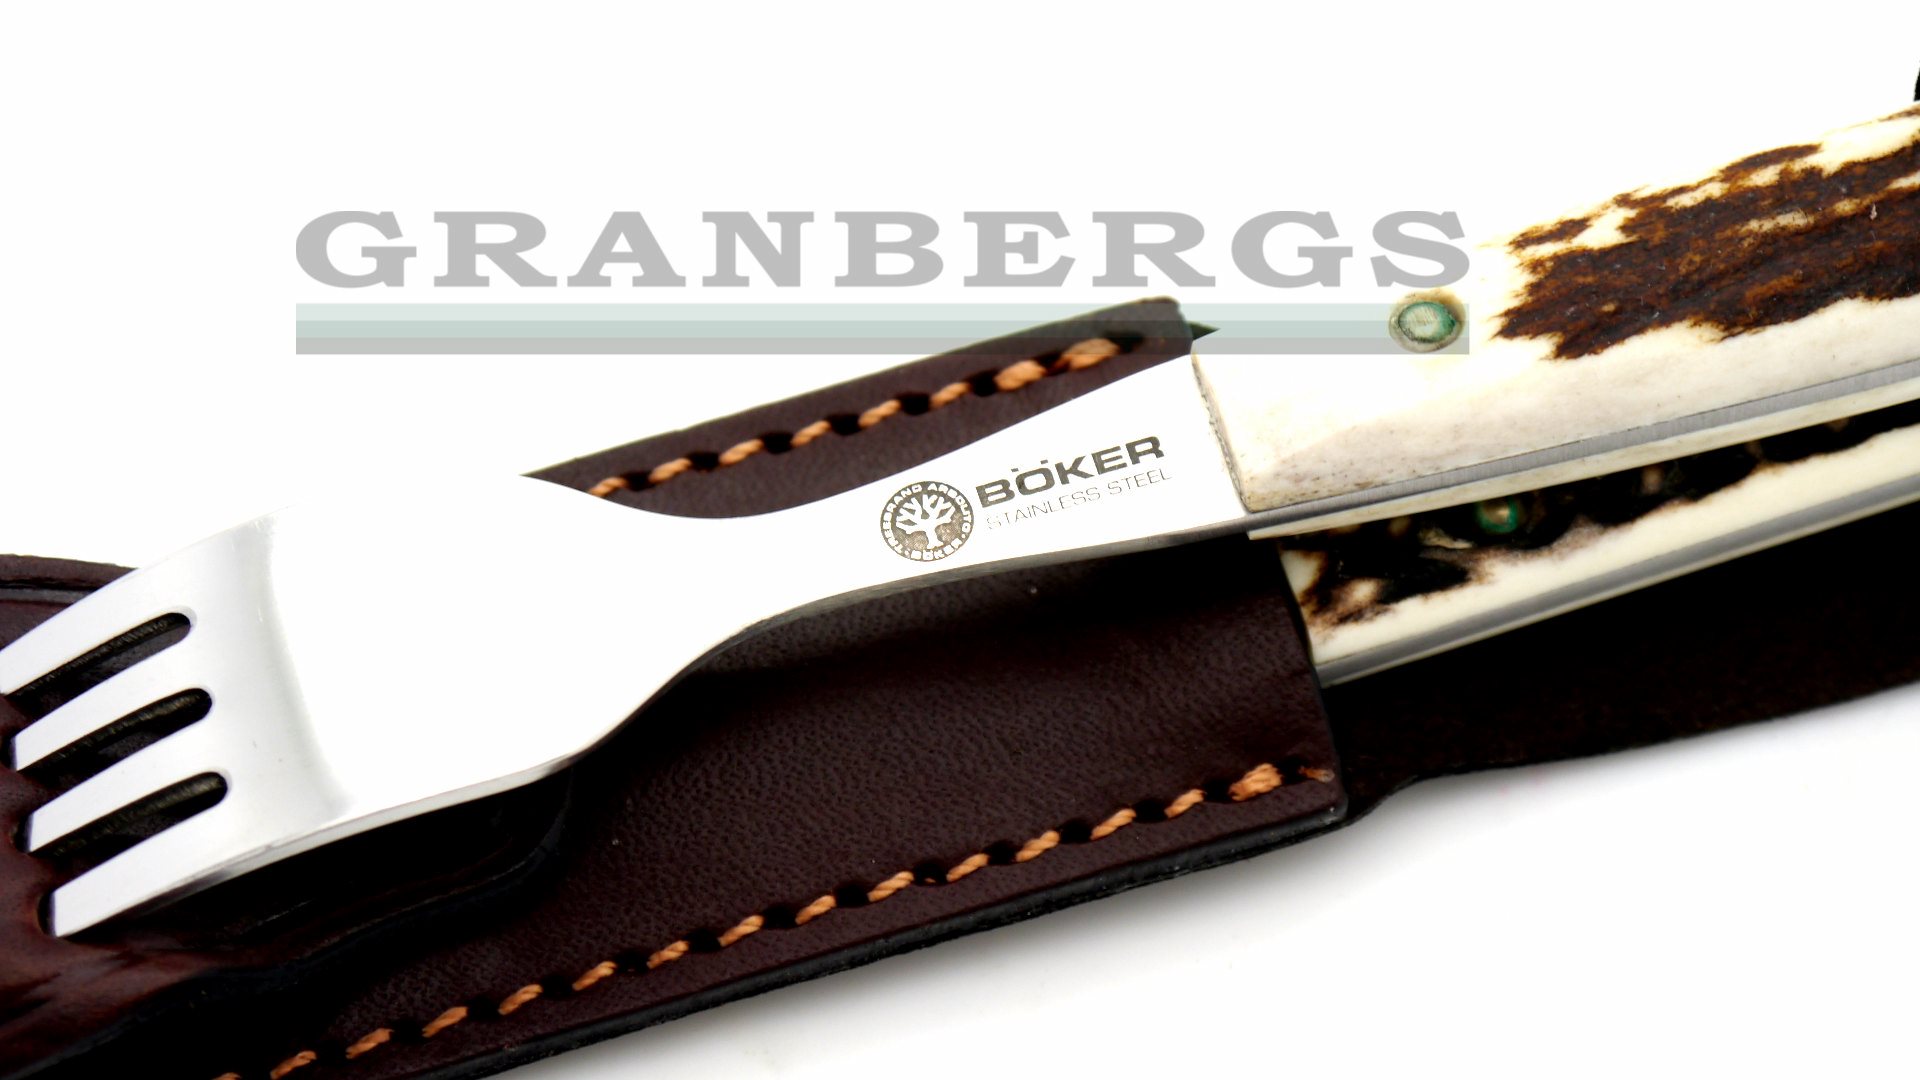 https://granbergs.com.au/getattachment/Products/Knives-Outdoors/Boker-03BA5736H-Arbolito-Salida-Fuertes-Stag-Knife/3P1120789Boker-Arbolito-Stag-Knife-and-Fork-Set-03BA501HH-1920p-Watermark.jpg.aspx